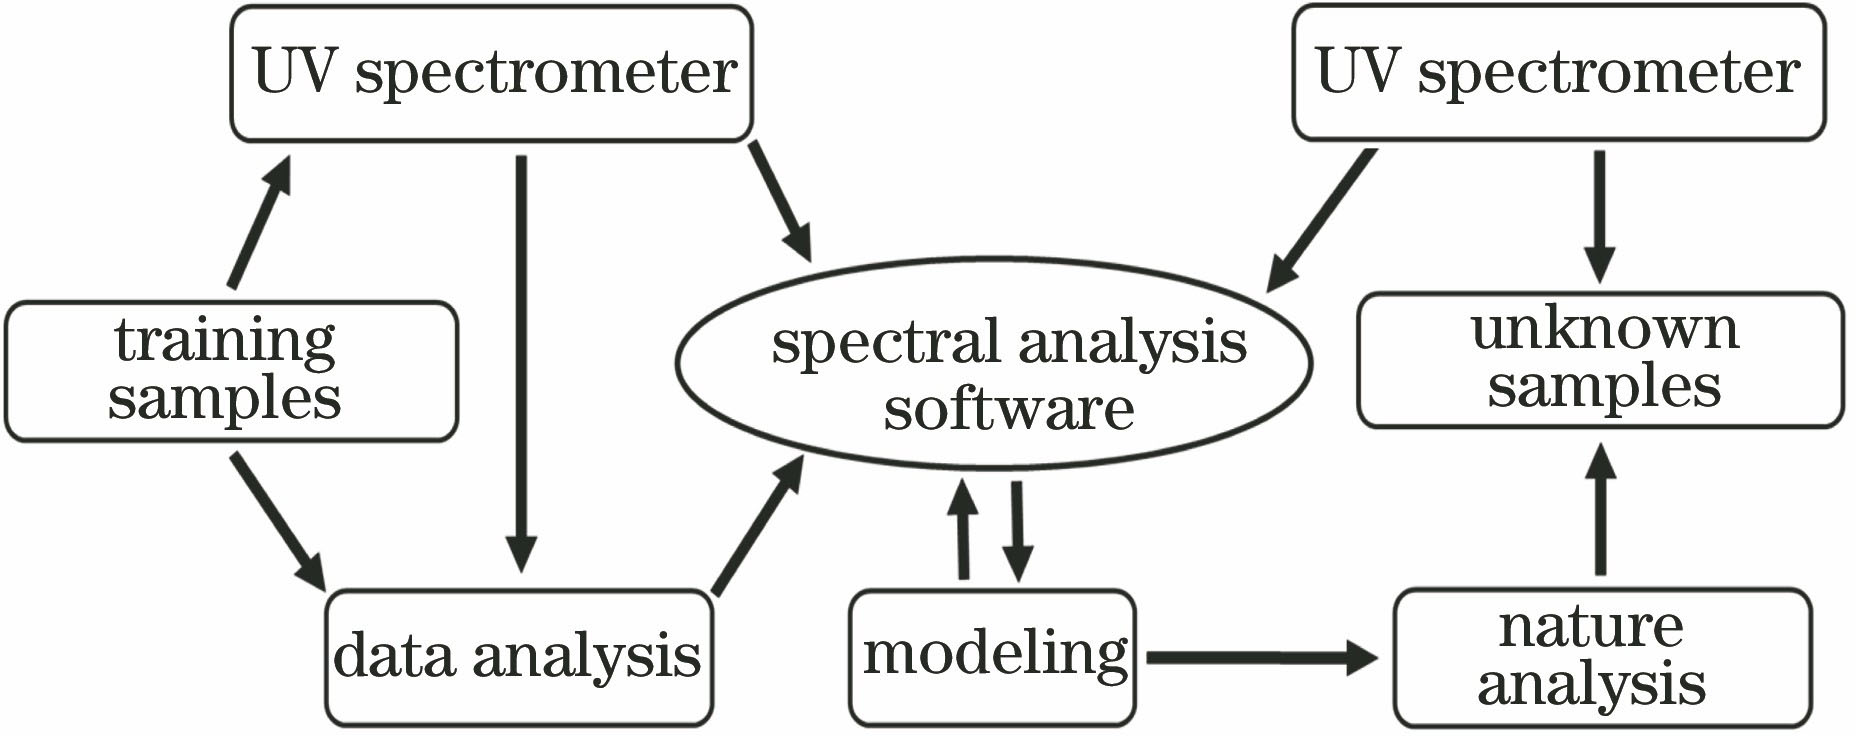 Schematic of analyzing process